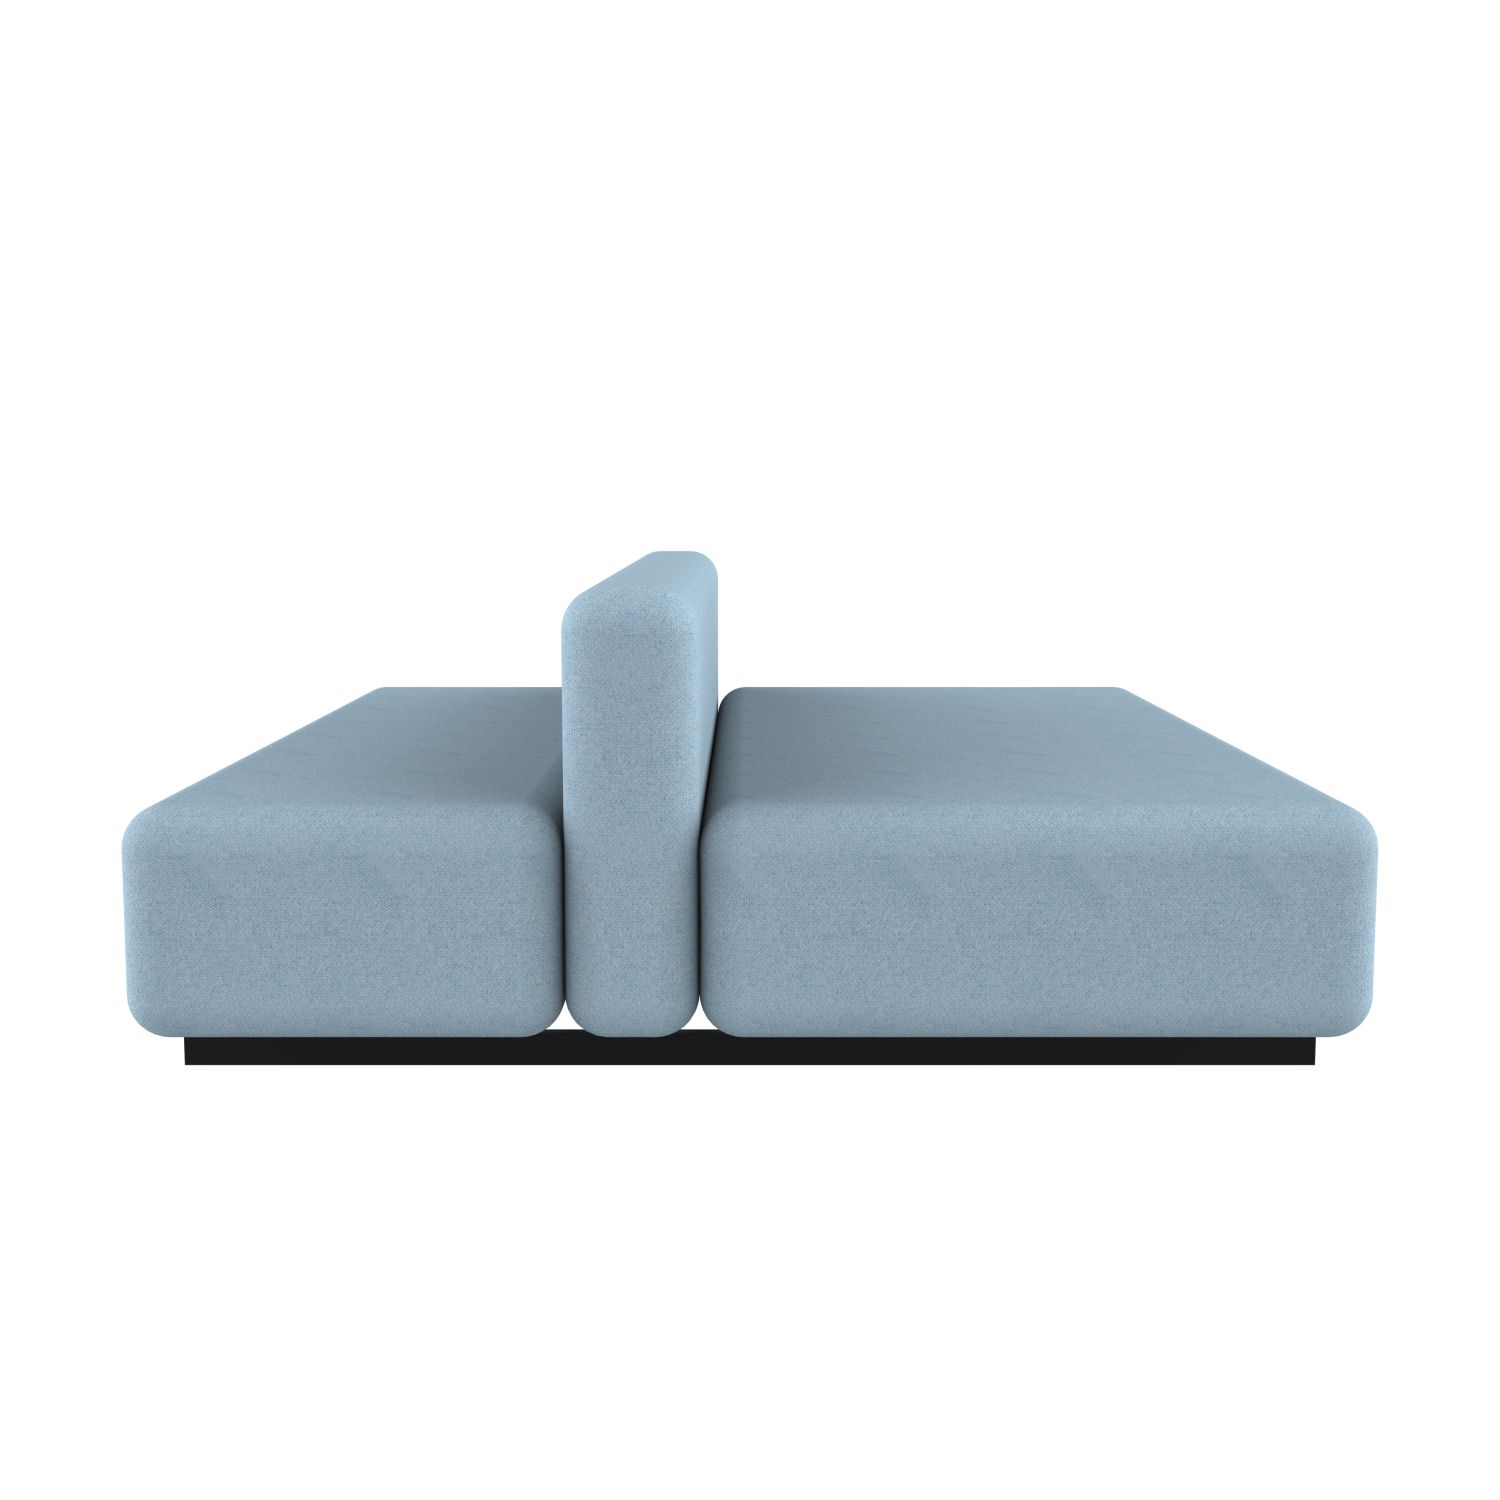 lensvelt fabio novembre balance duo sofa without armrest moss pastel blue 40 black ral9005